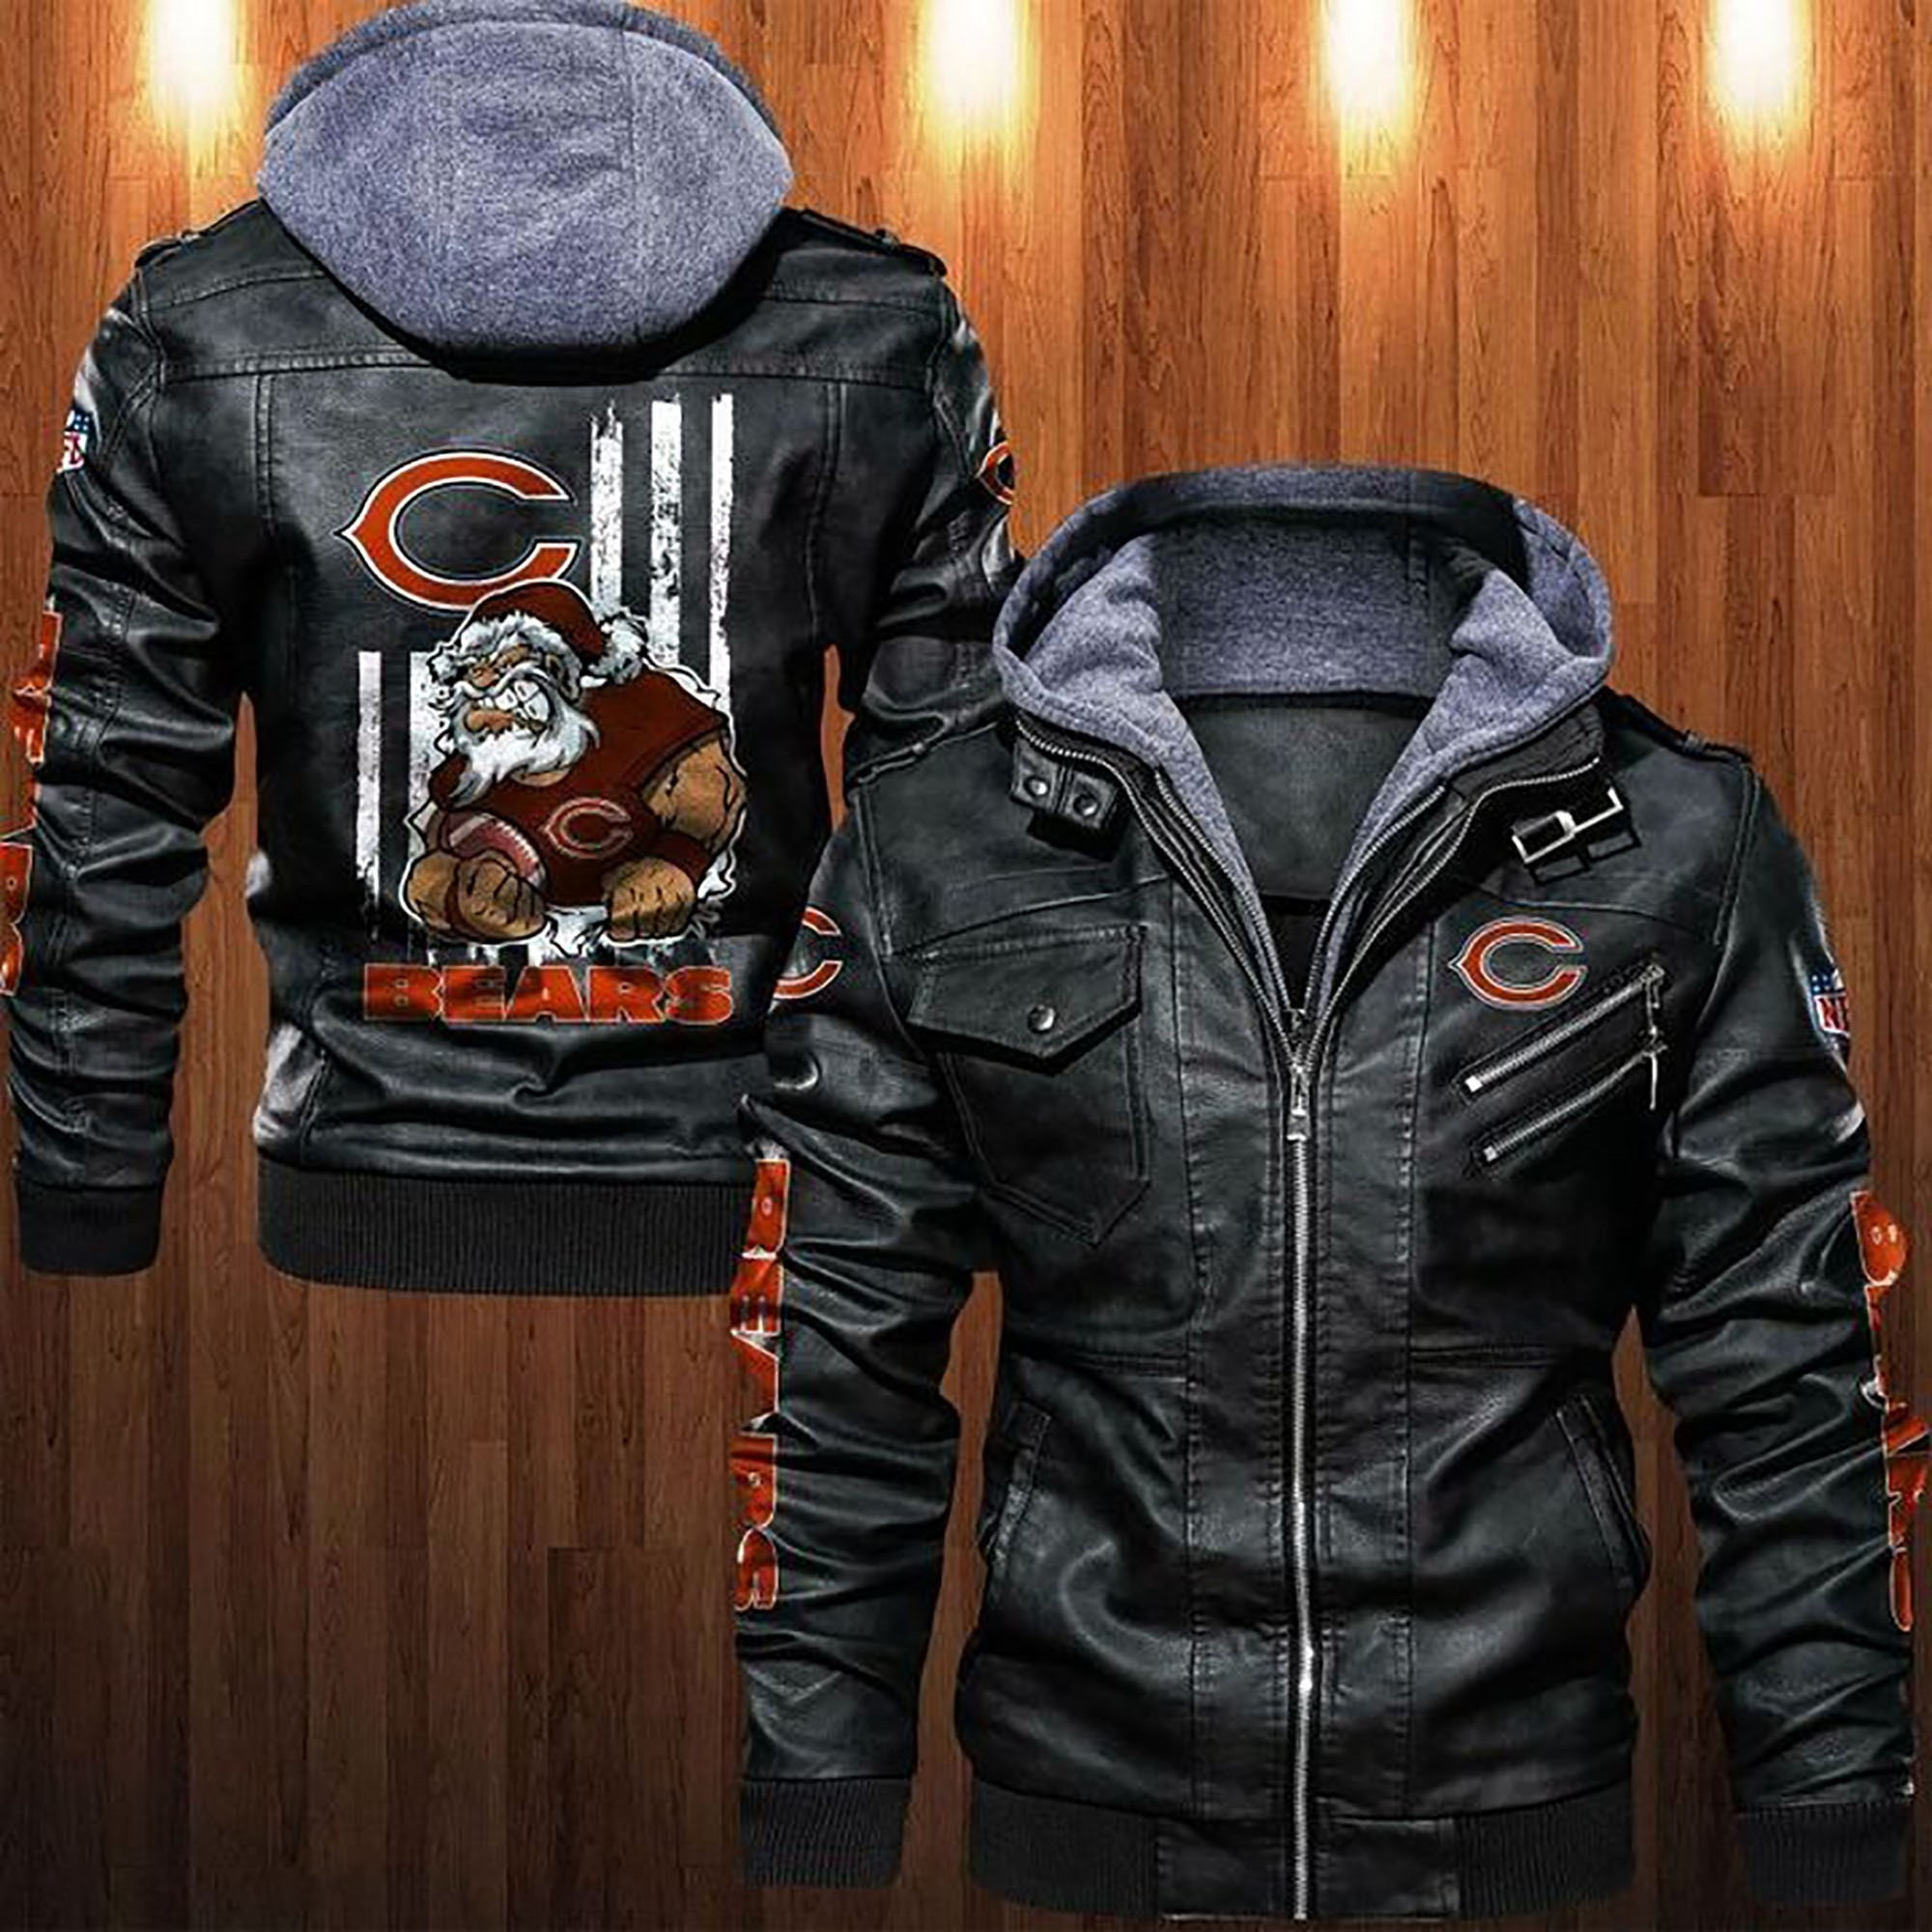 Choosing Leather Jacket that looks good on you below 85